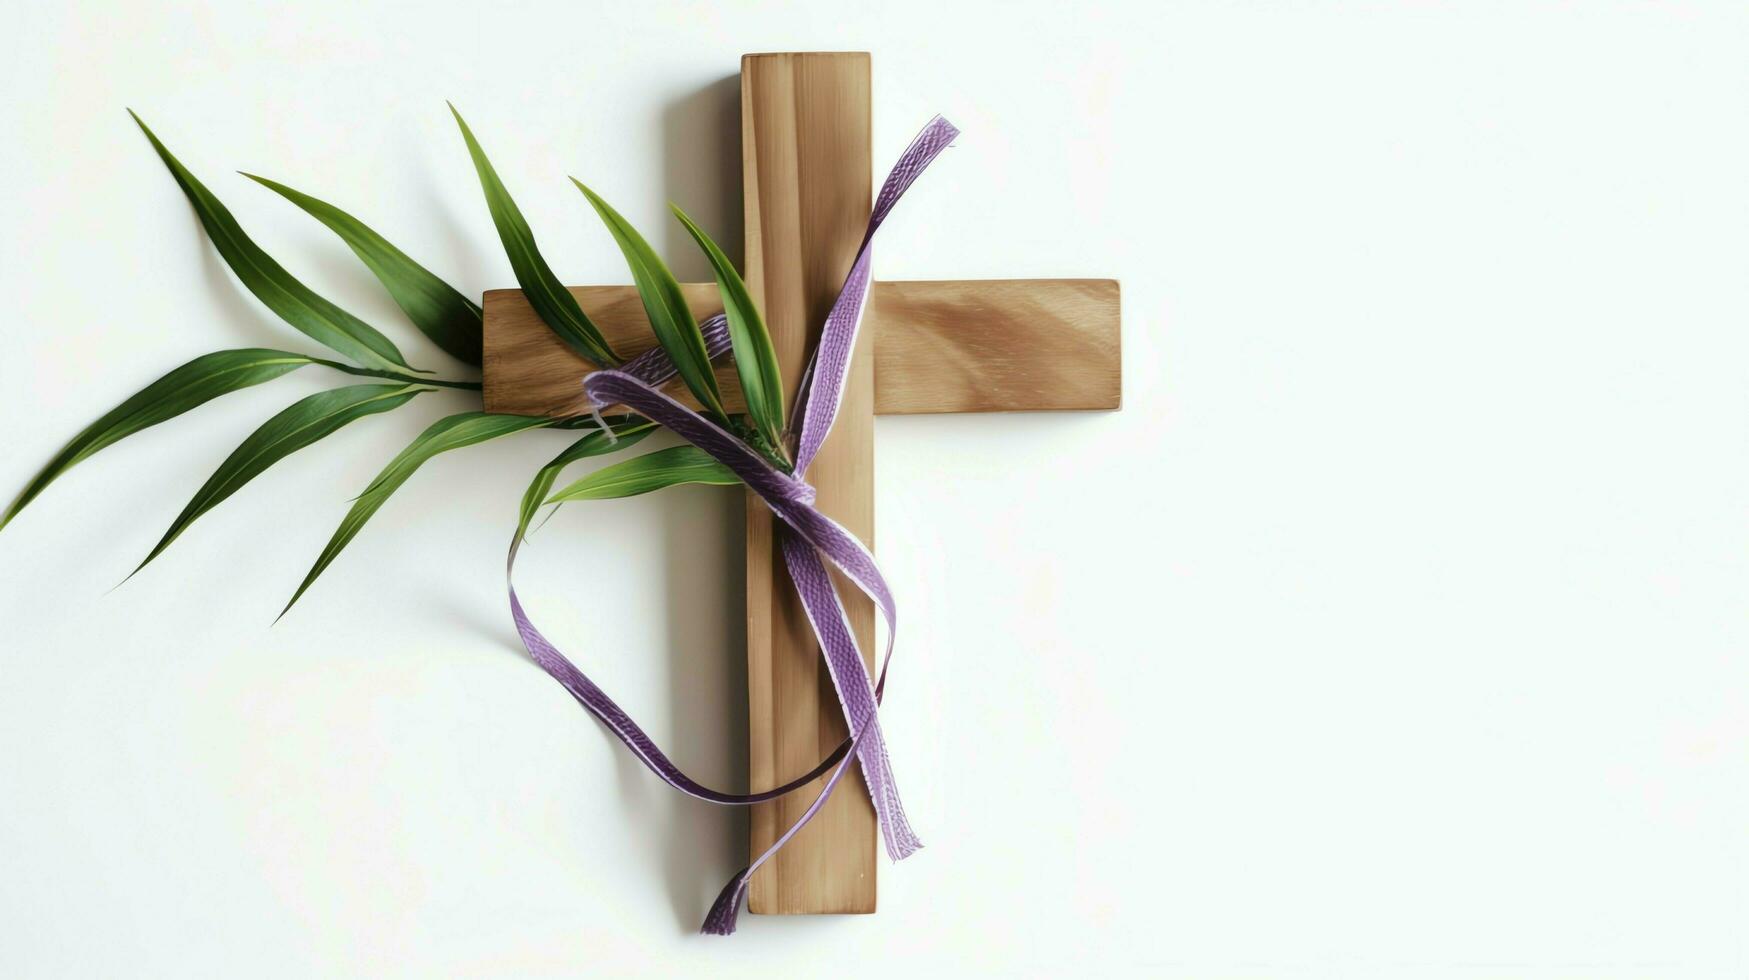 un cristiano de madera cruzar crucifijo firmar con verde palma hojas como religioso día festivo. palma domingo evento concepto por ai generado foto